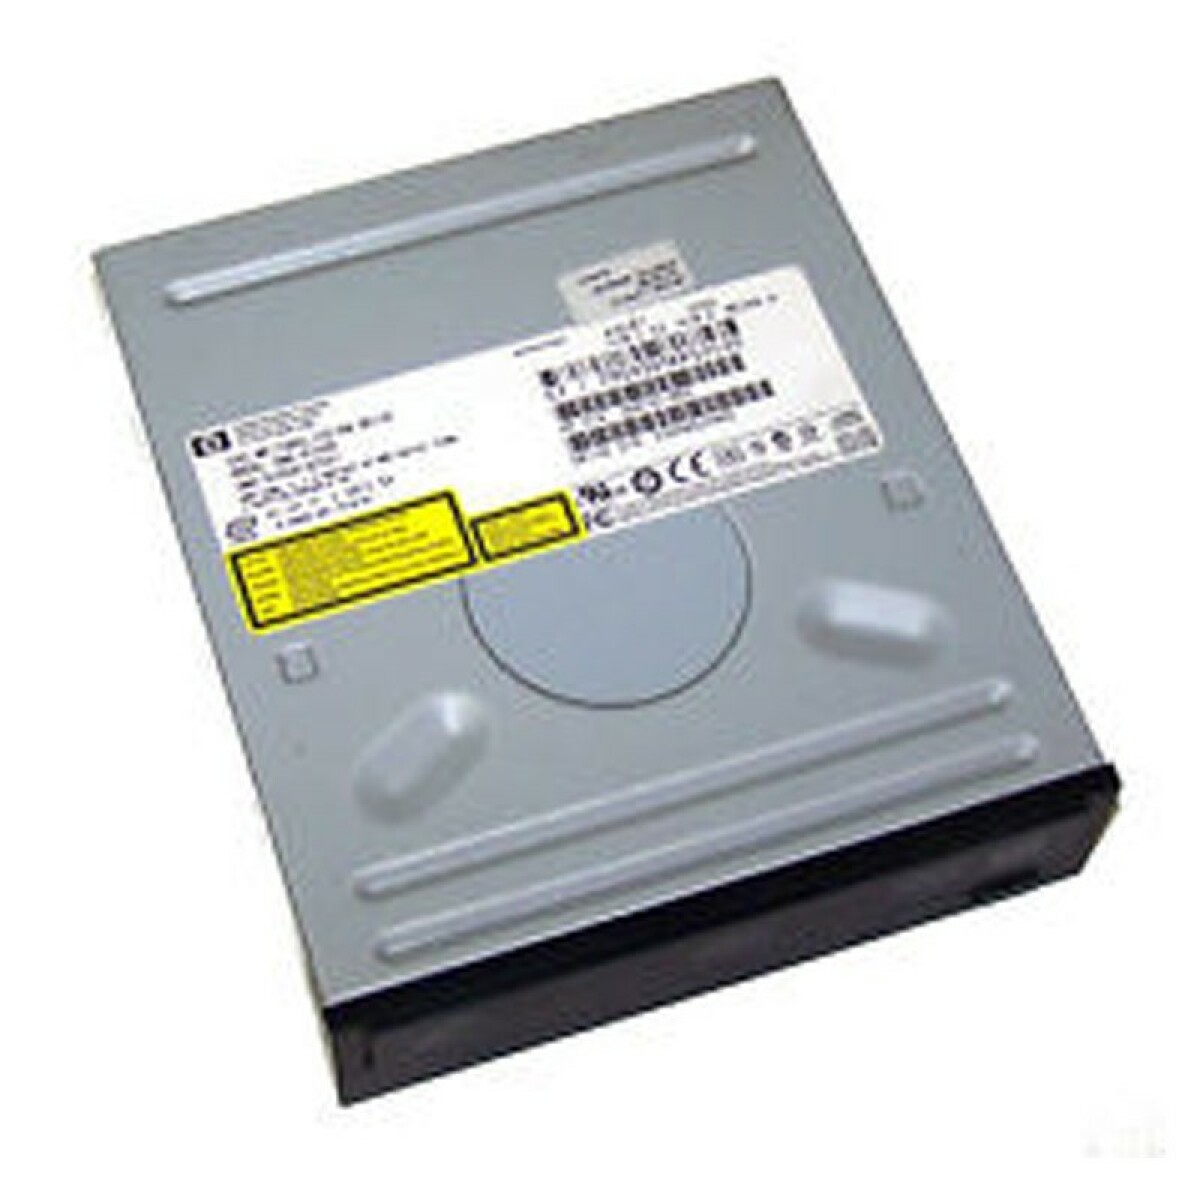 Graveur DVD Interne Hitachi Graveur DVD RW interne 5.25" Hitachi LG GWA-4160B 40x40x16x16x IDE ATA Noir